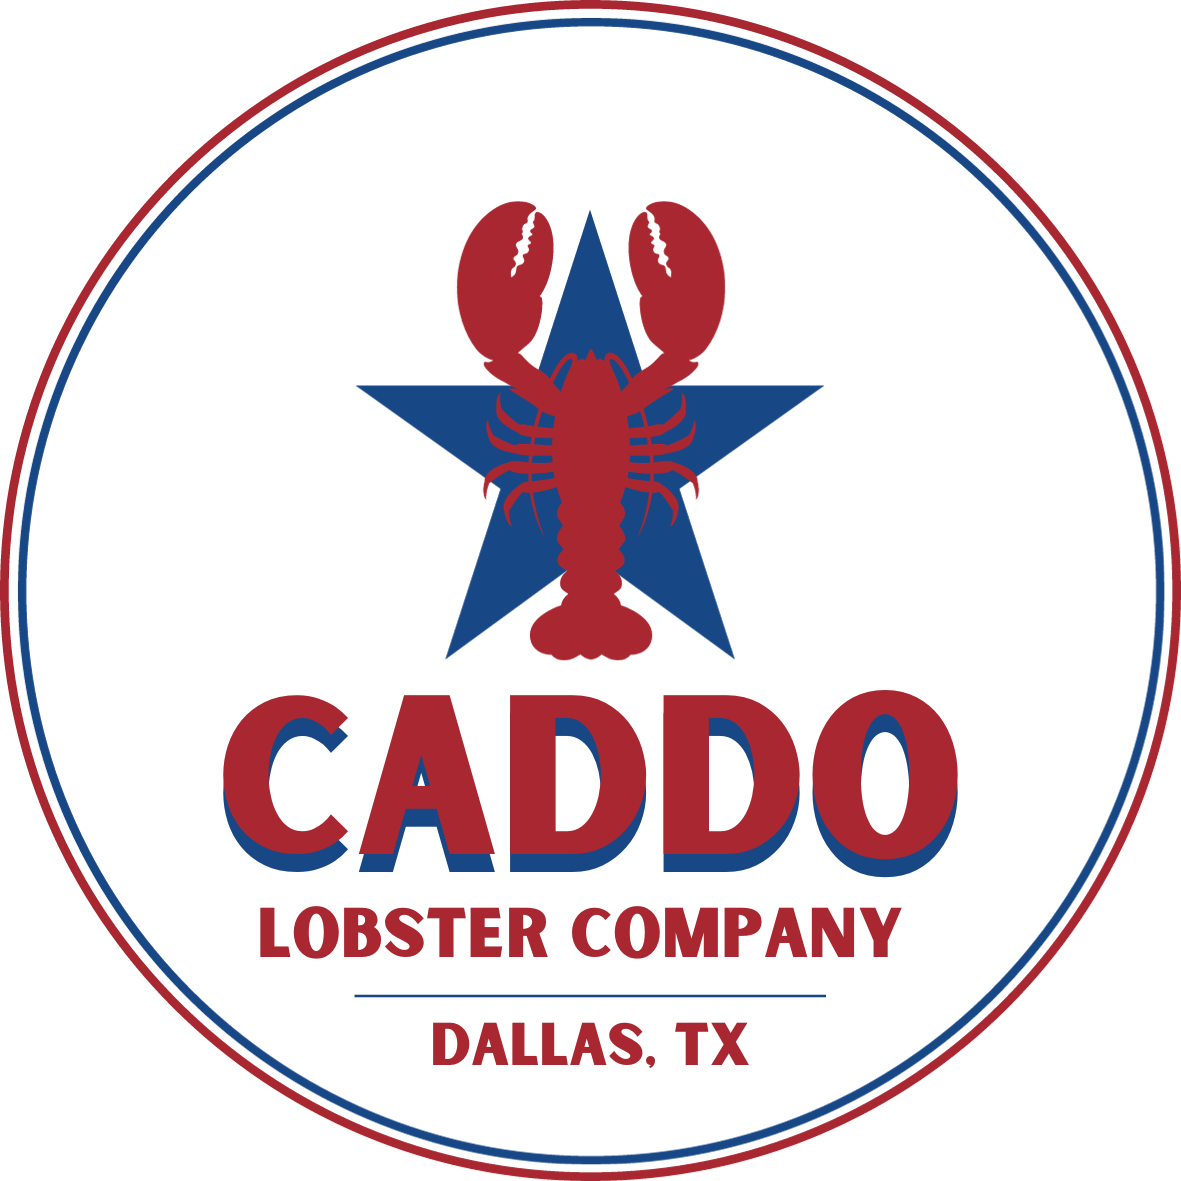 Caddo Lobster Company